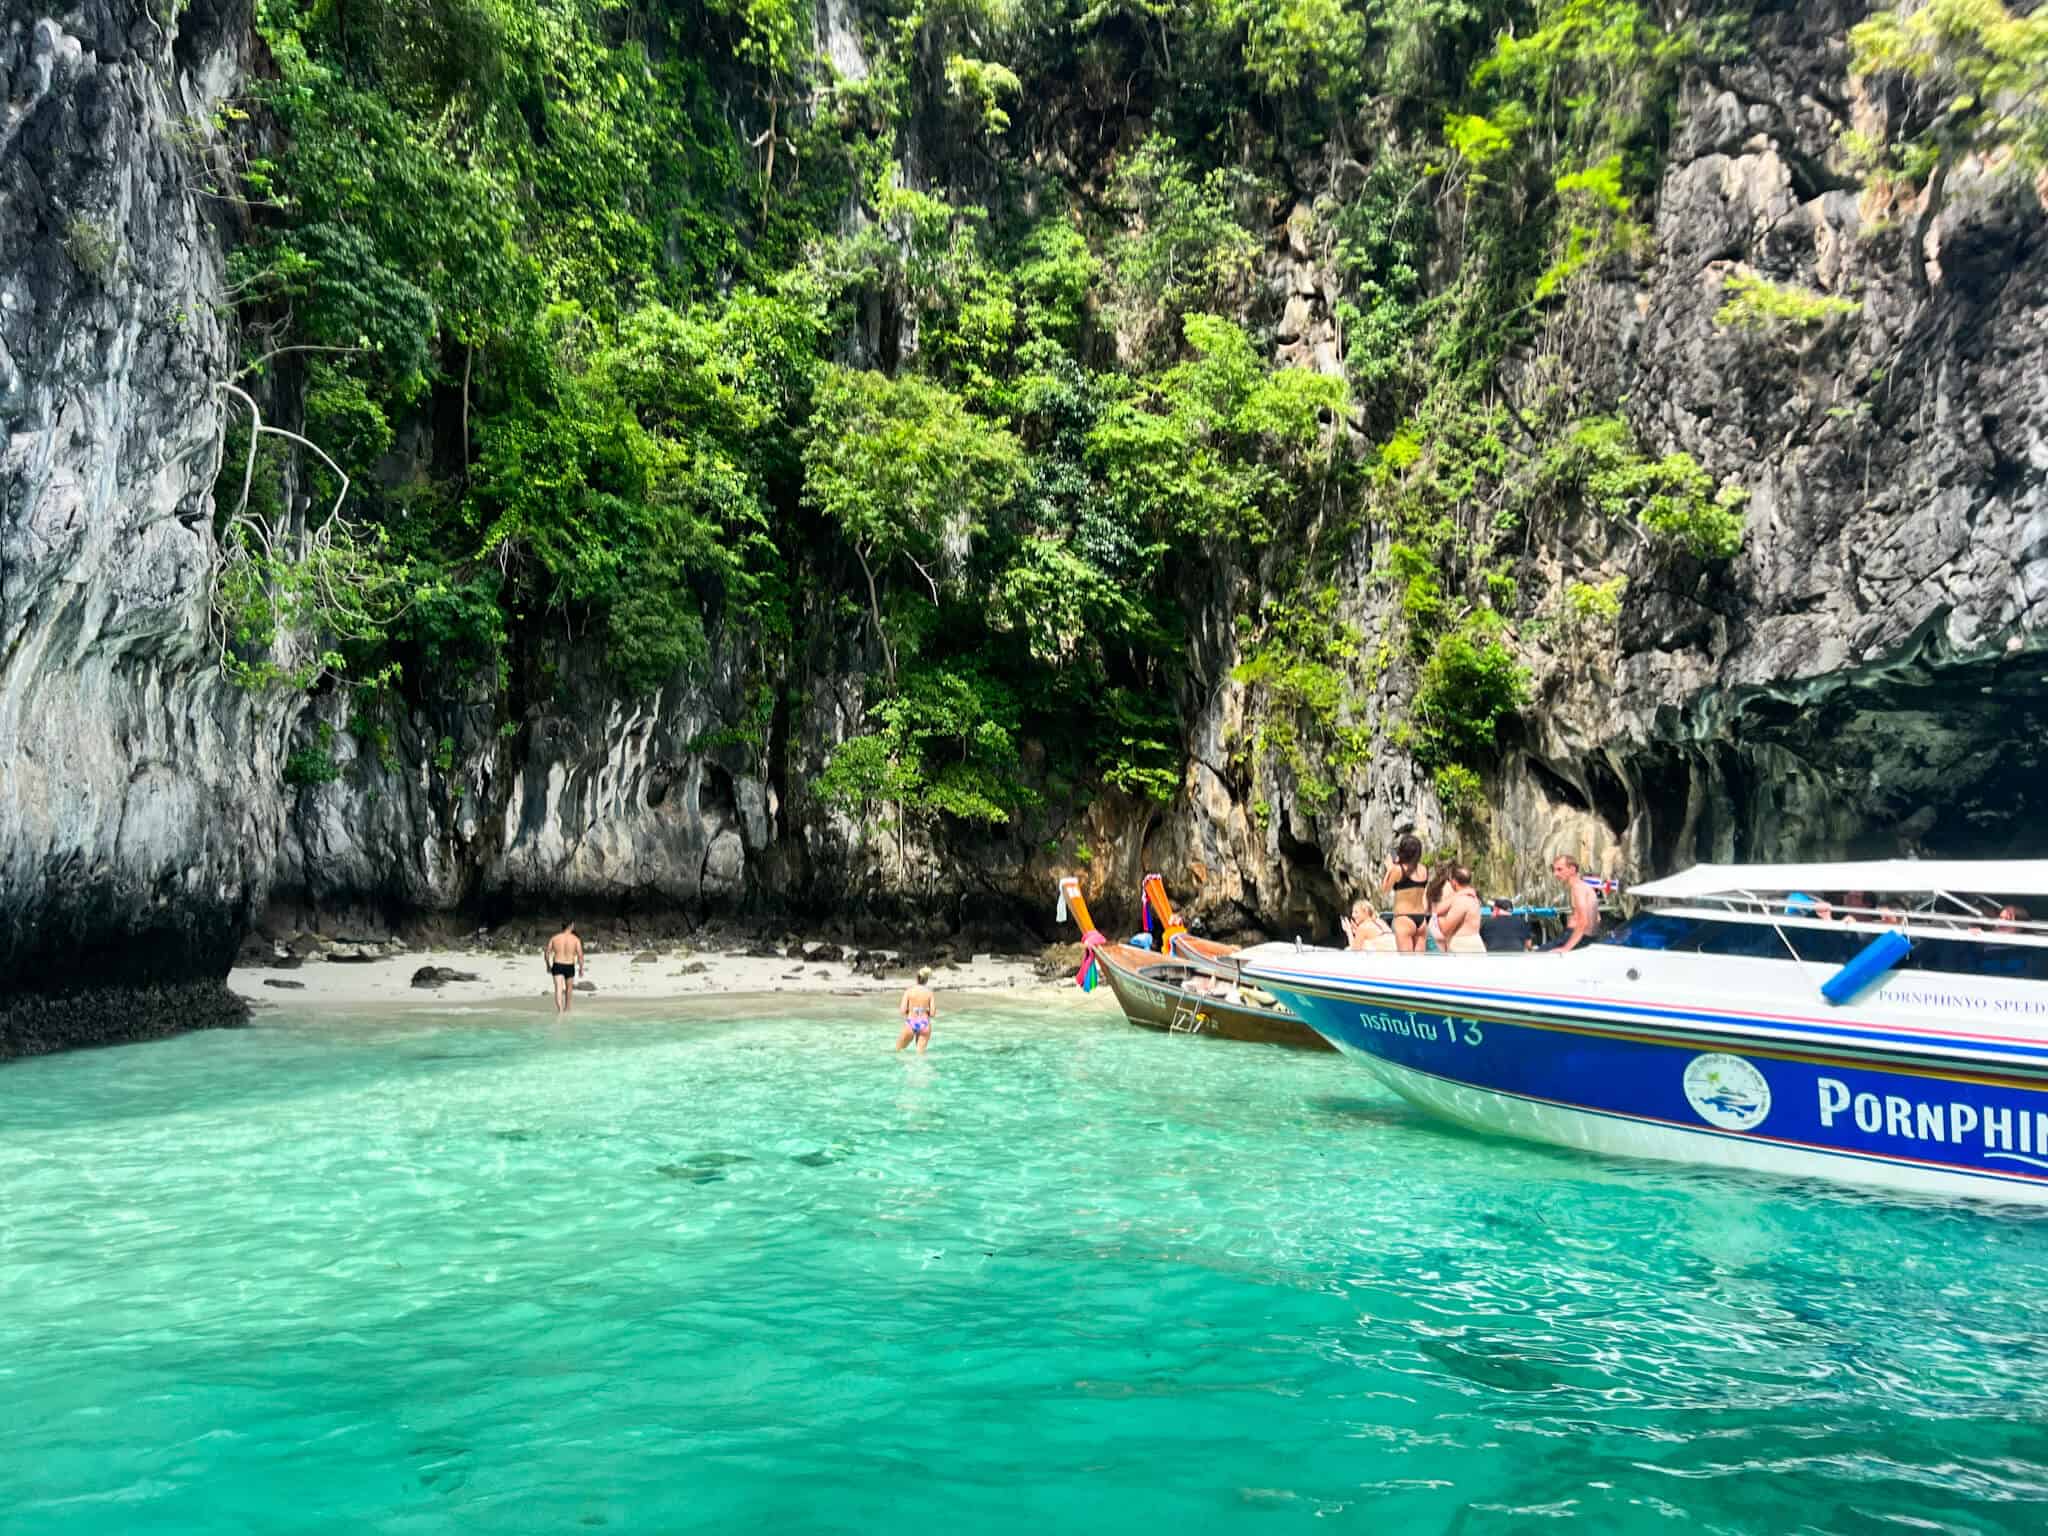 James Bond Island Phuket islands